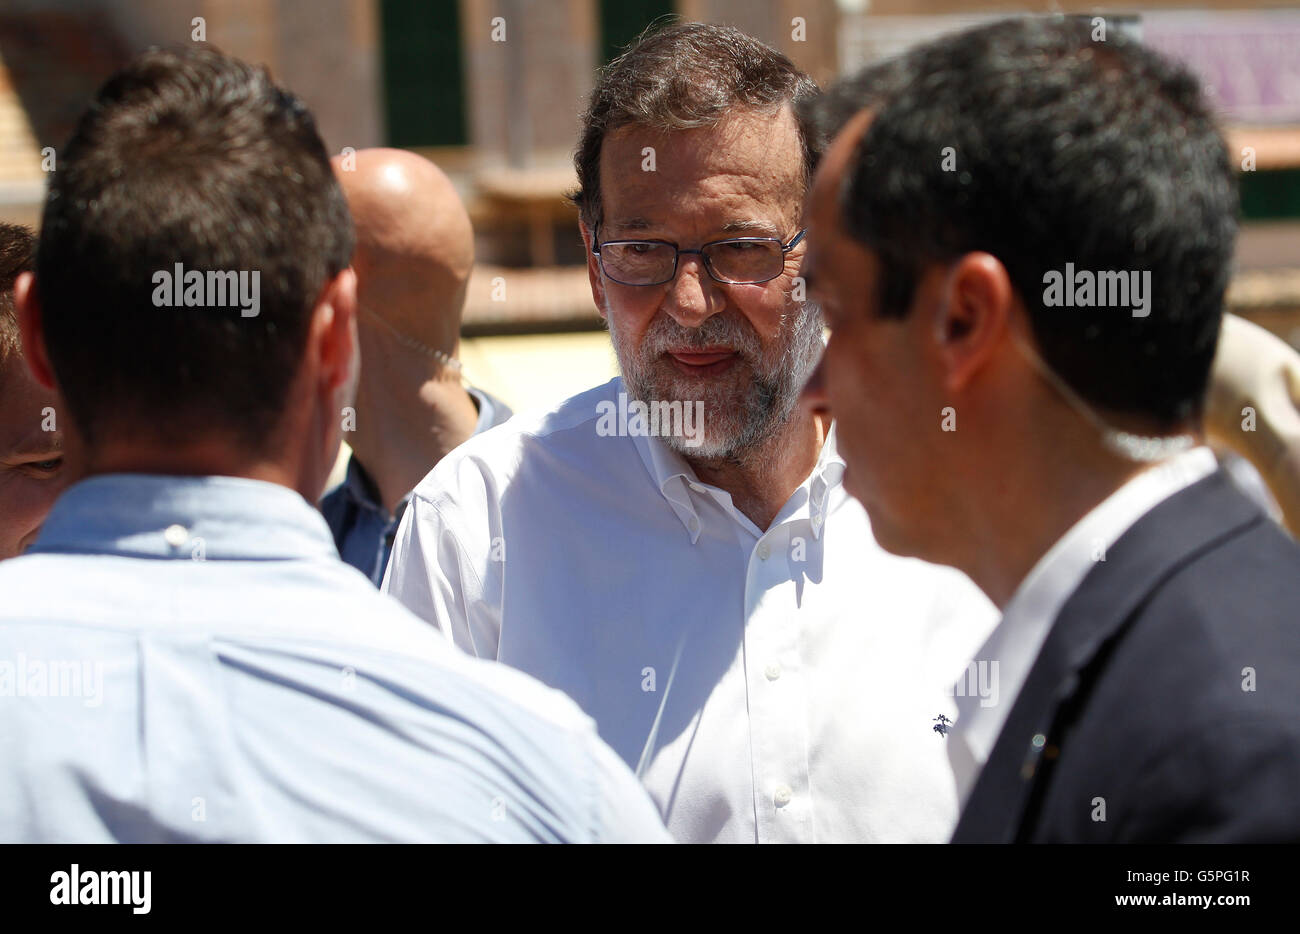 Mallorca, Espagne. 22 Juin, 2016. Le président de l'Espagne, Mariano Rajoy. Dans un rassemblement politique à Majorque. Credit : Mafalda/Alamy Live News Banque D'Images